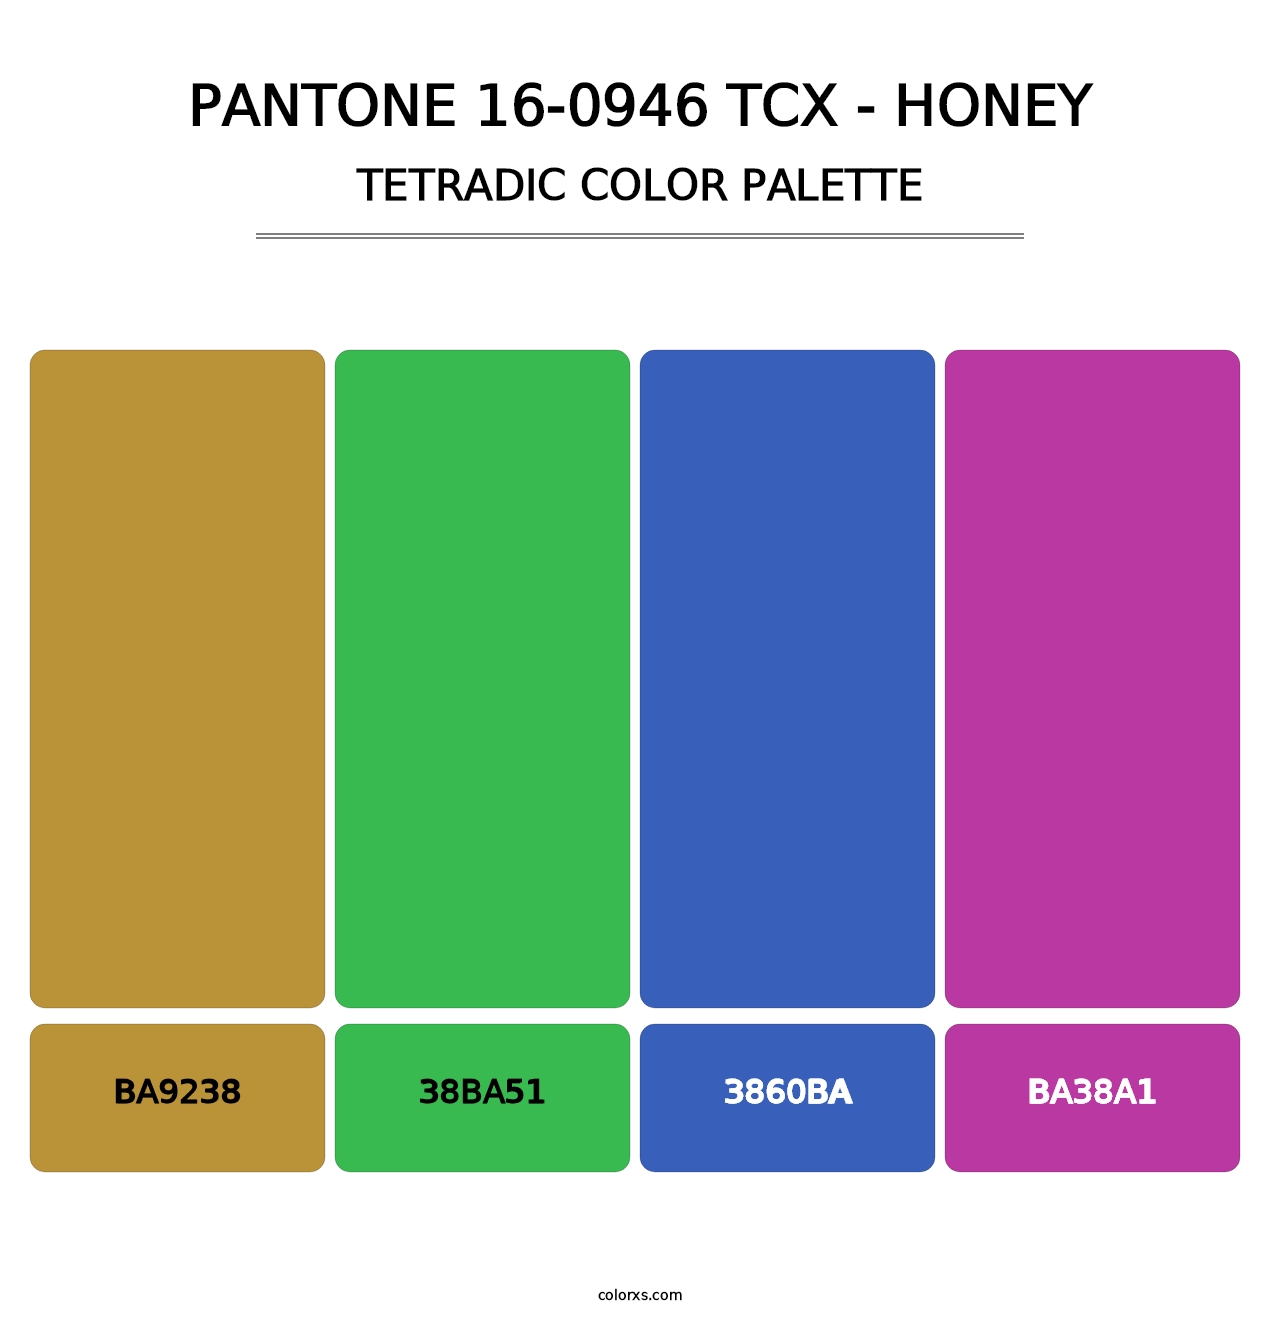 PANTONE 16-0946 TCX - Honey - Tetradic Color Palette